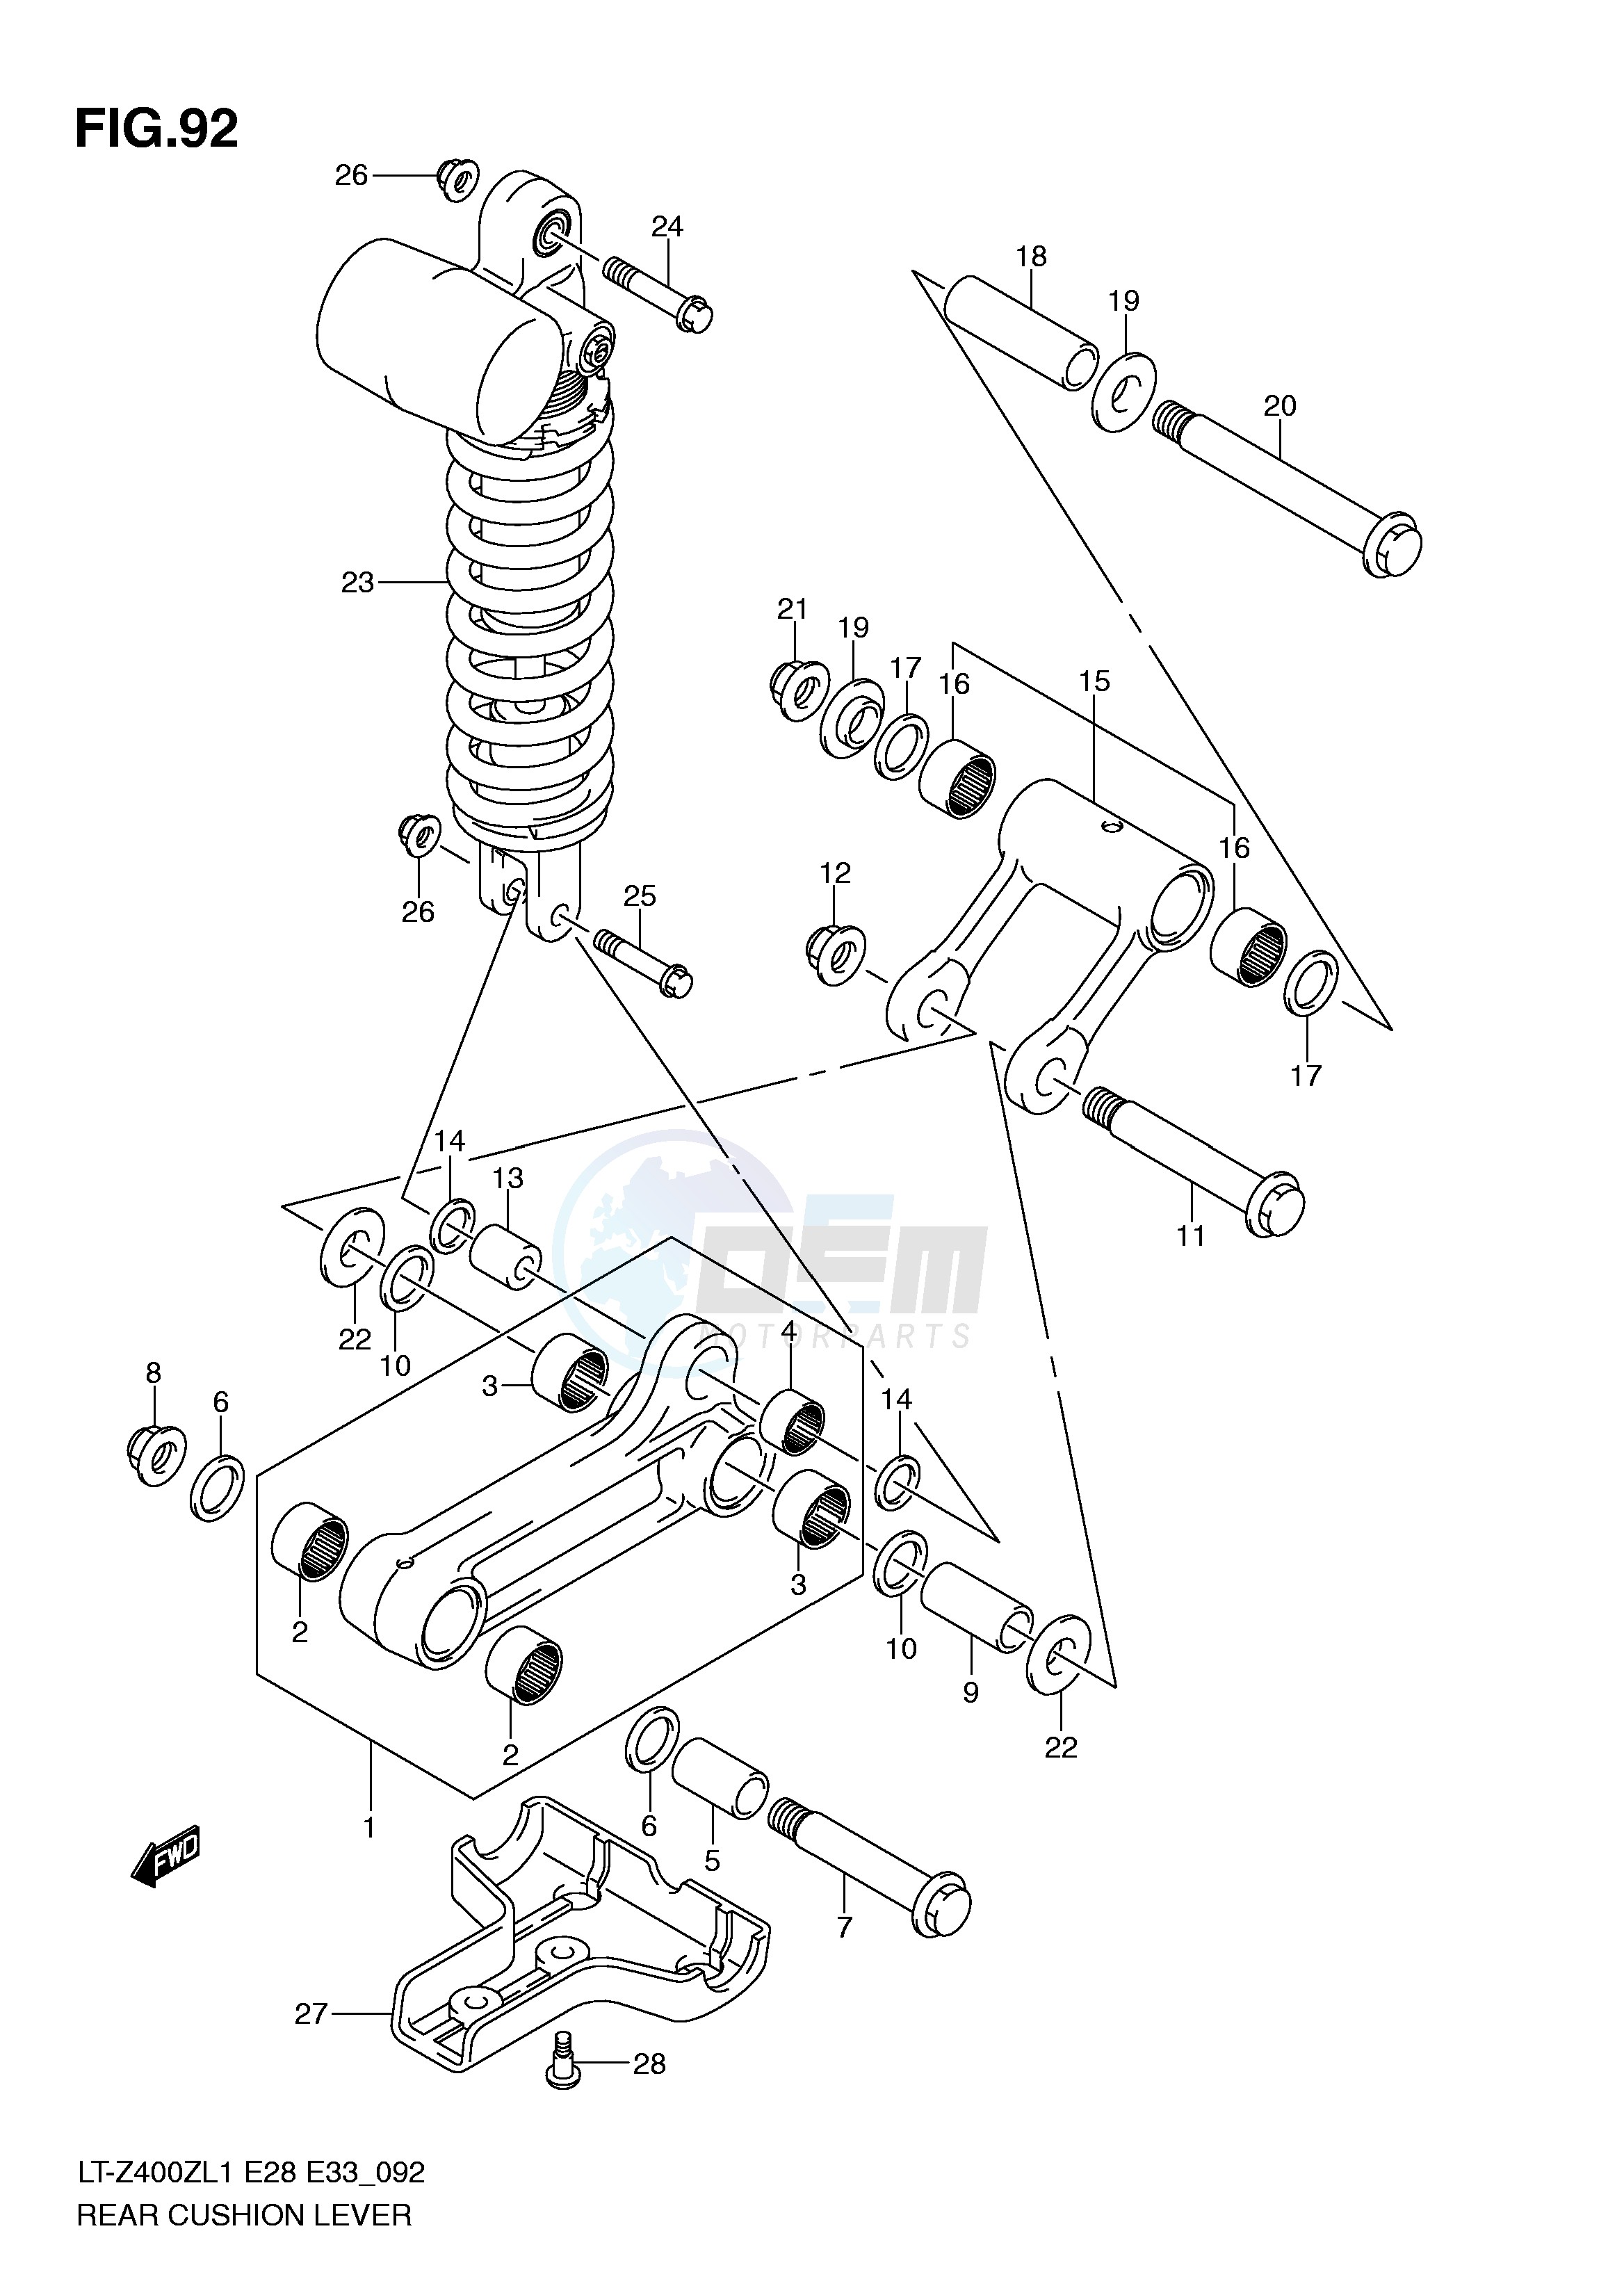 REAR CUSHION LEVER (LT-Z400ZL1 E33) blueprint